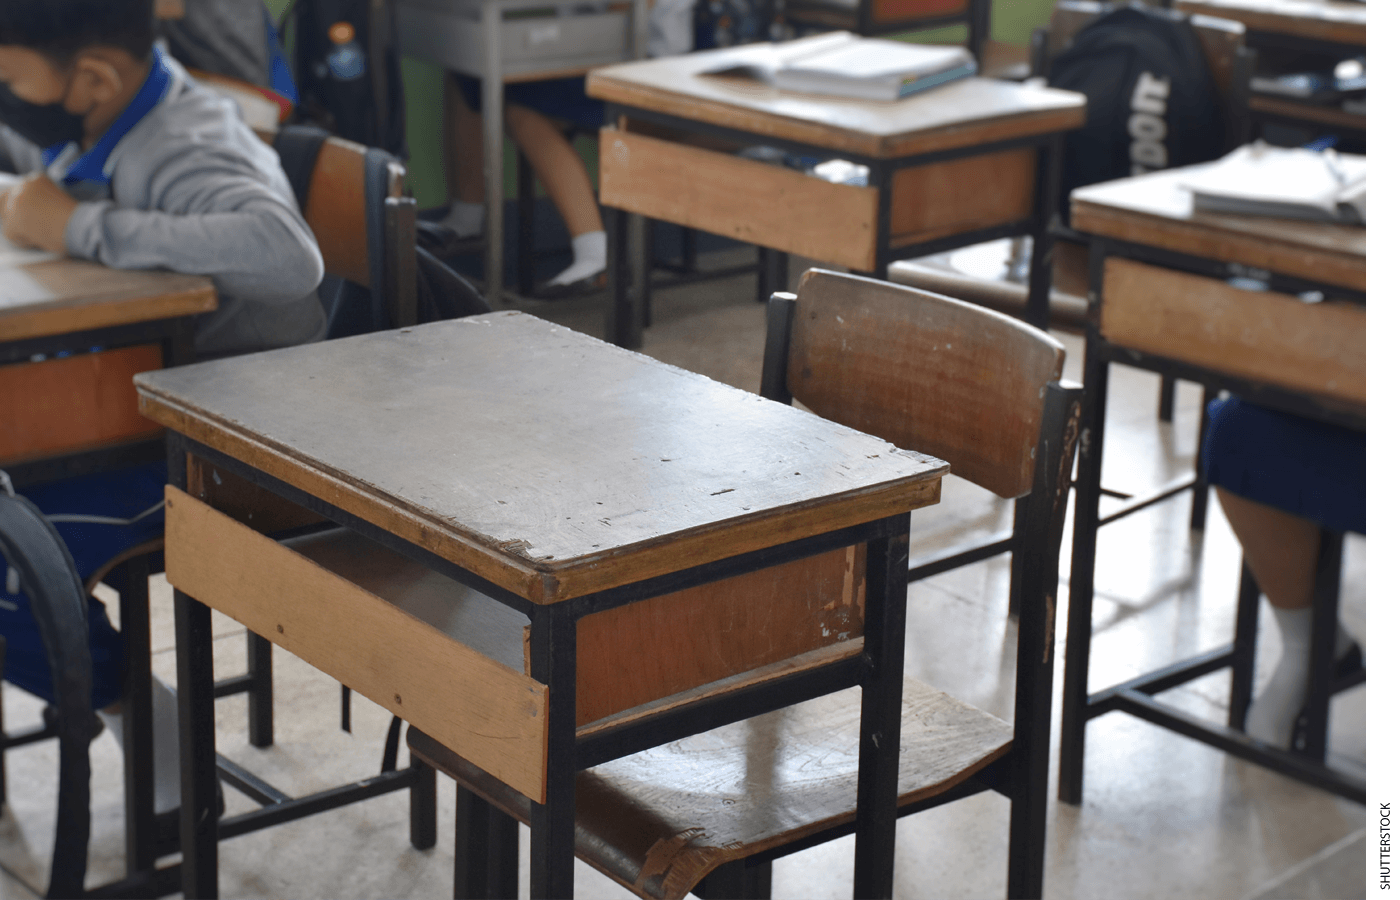 An empty desk in a classroom